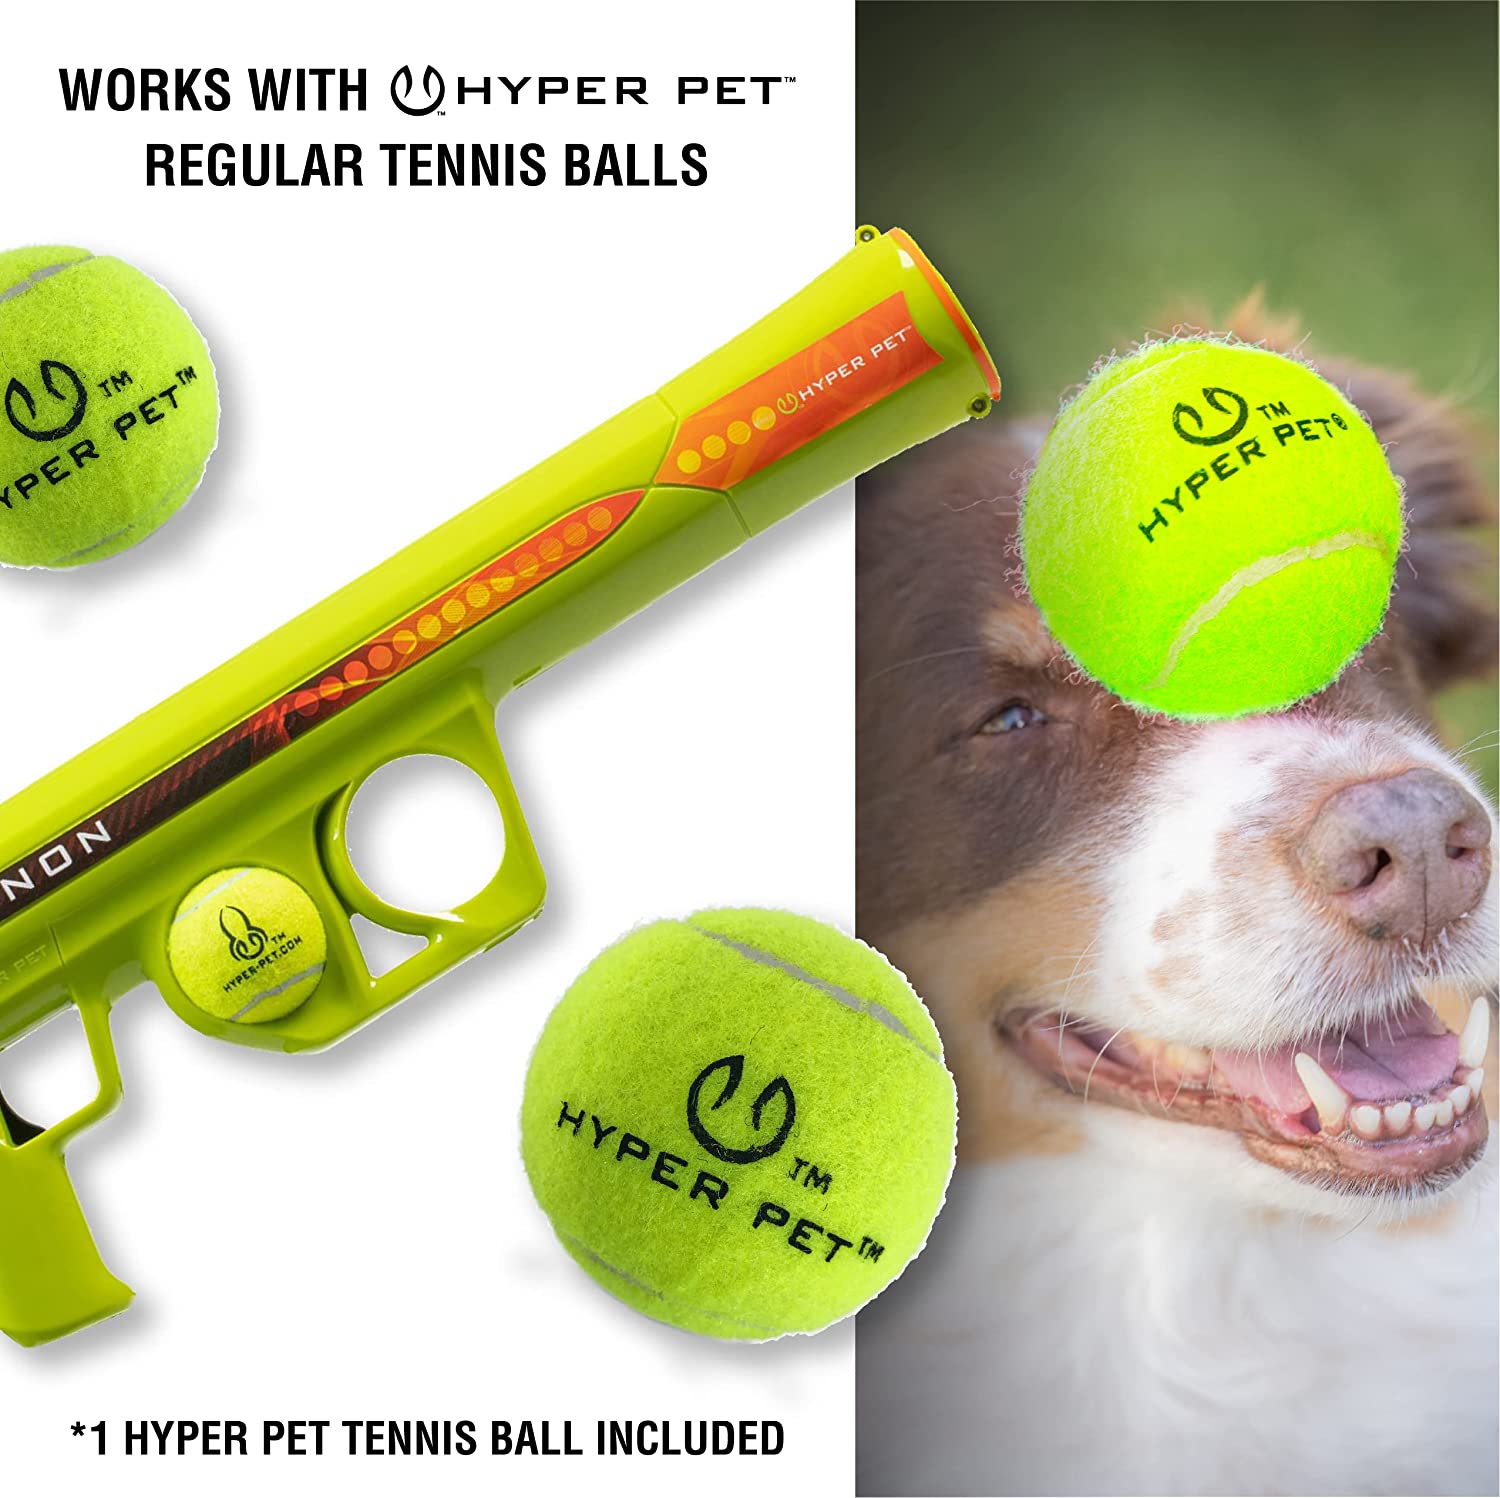 Juguete para perro pelota tipo tenis